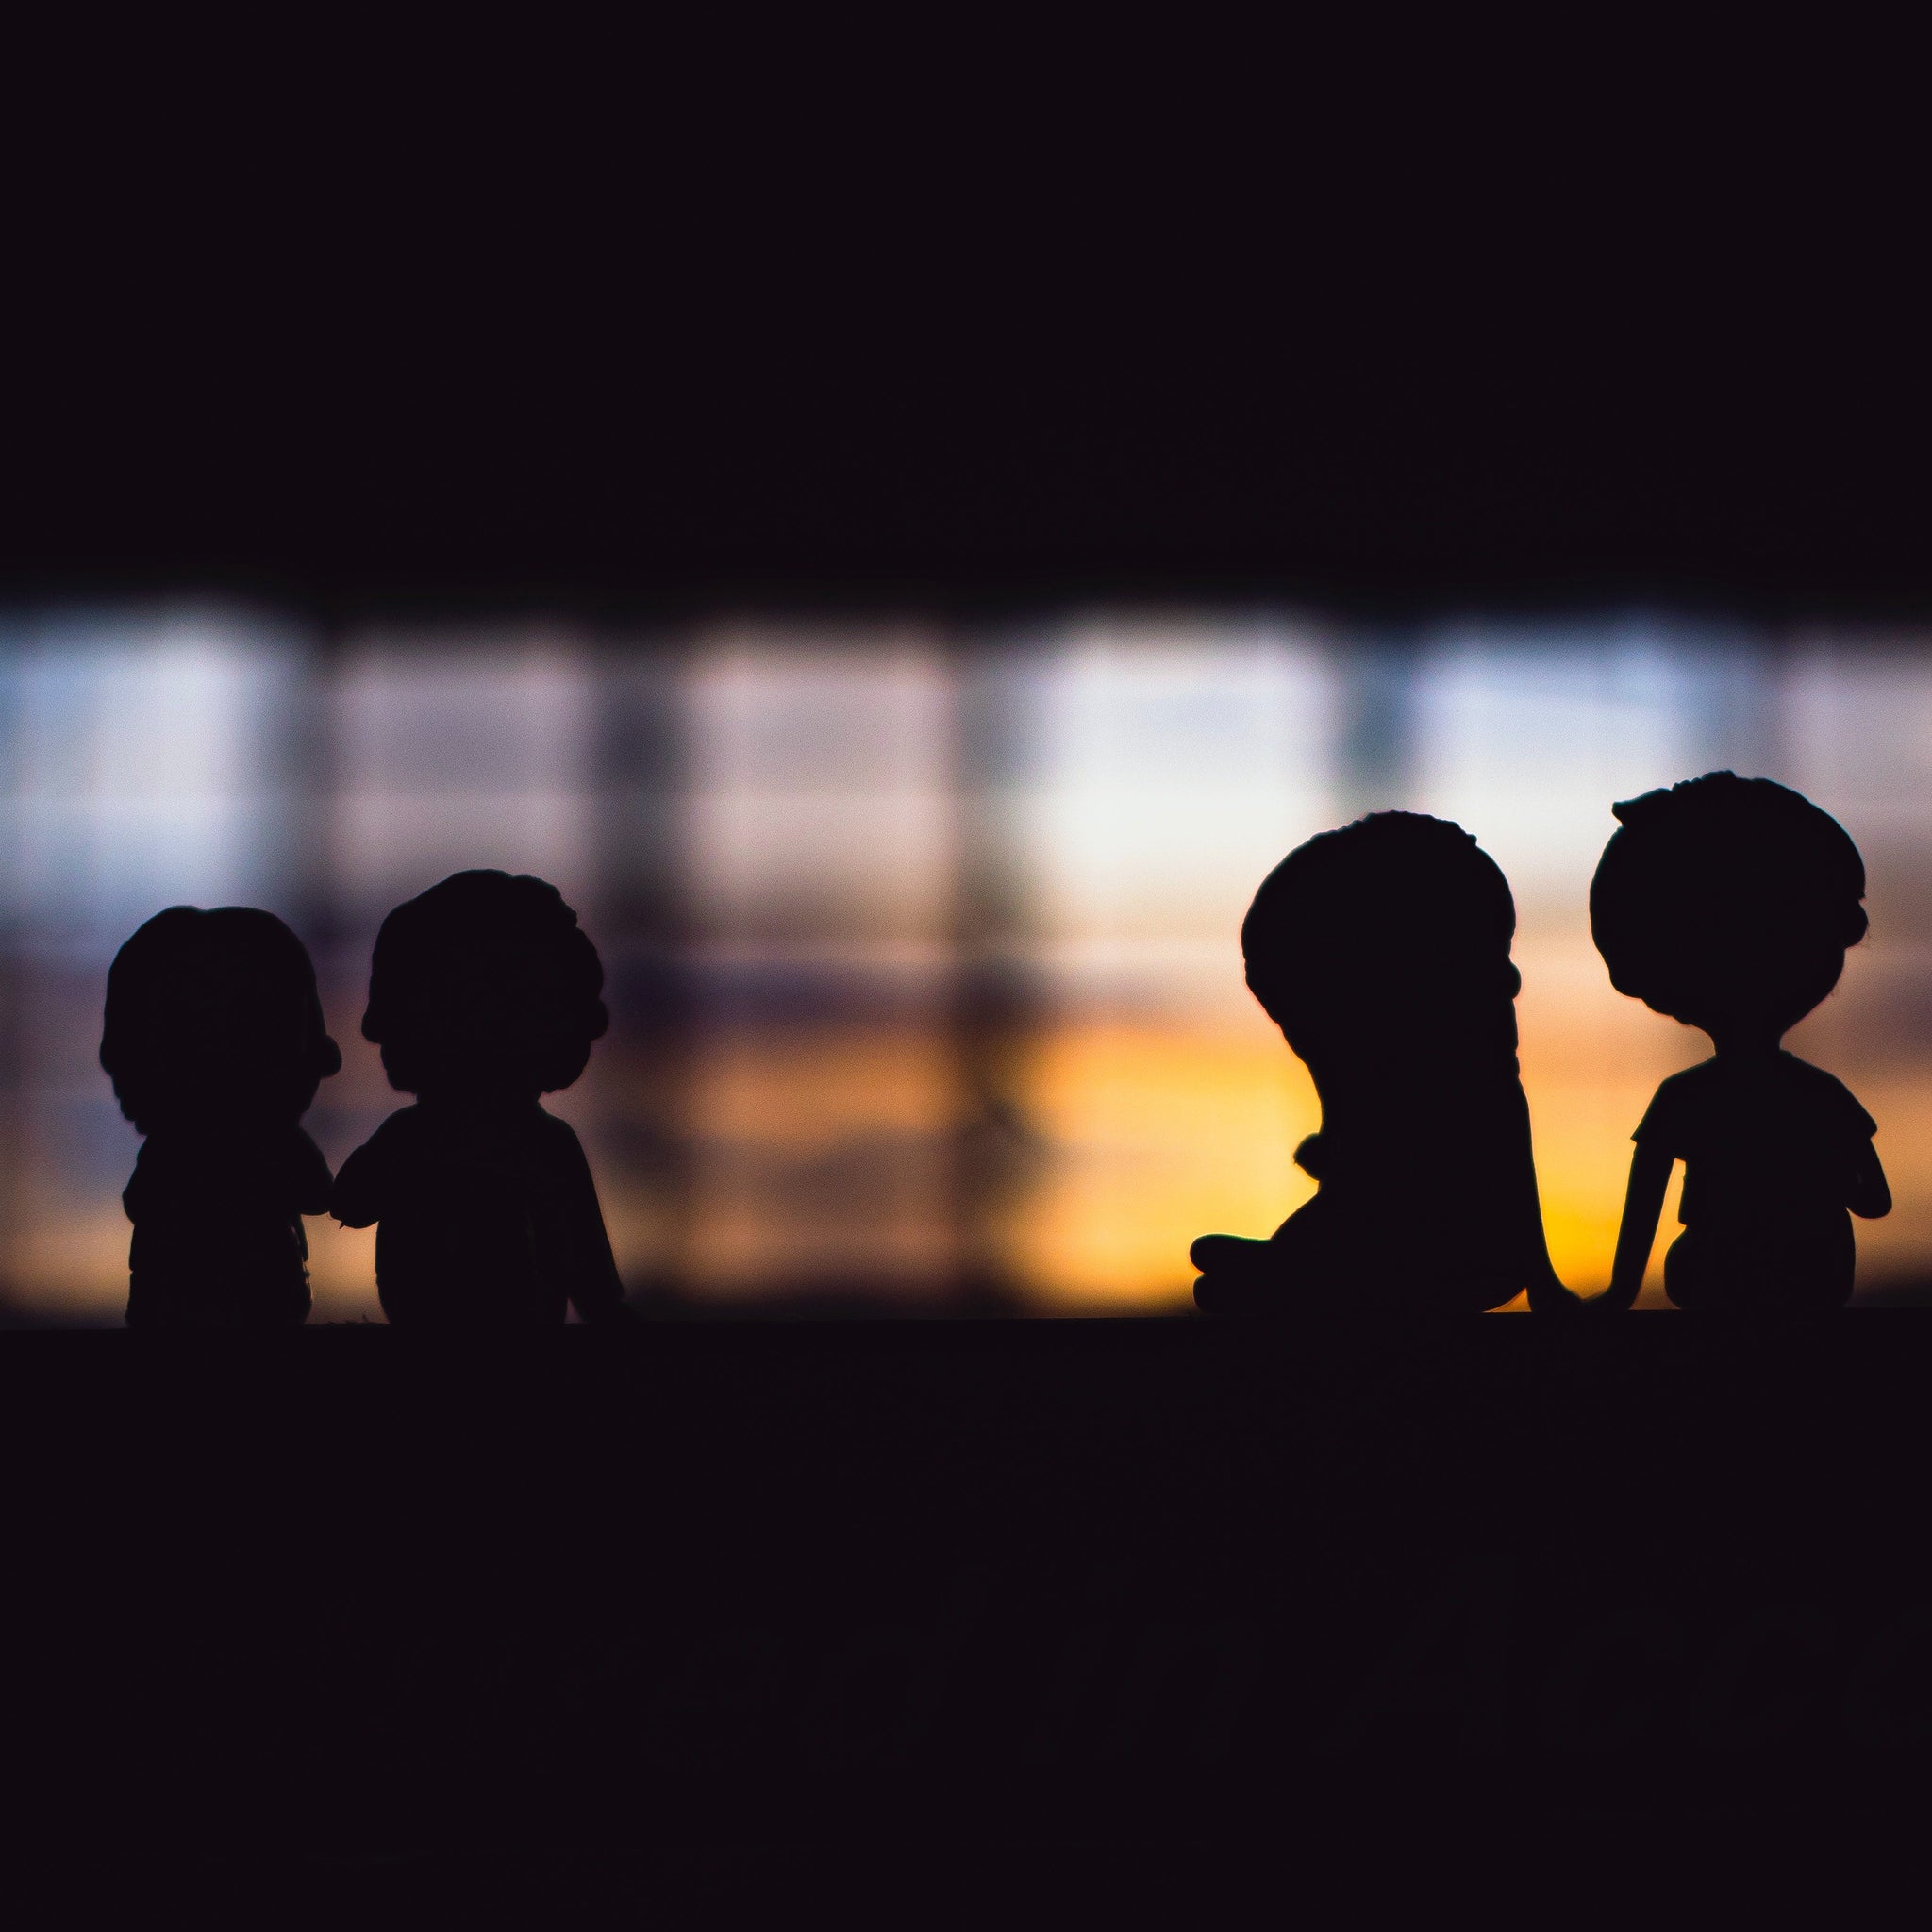 Figurine couples in darkness near window